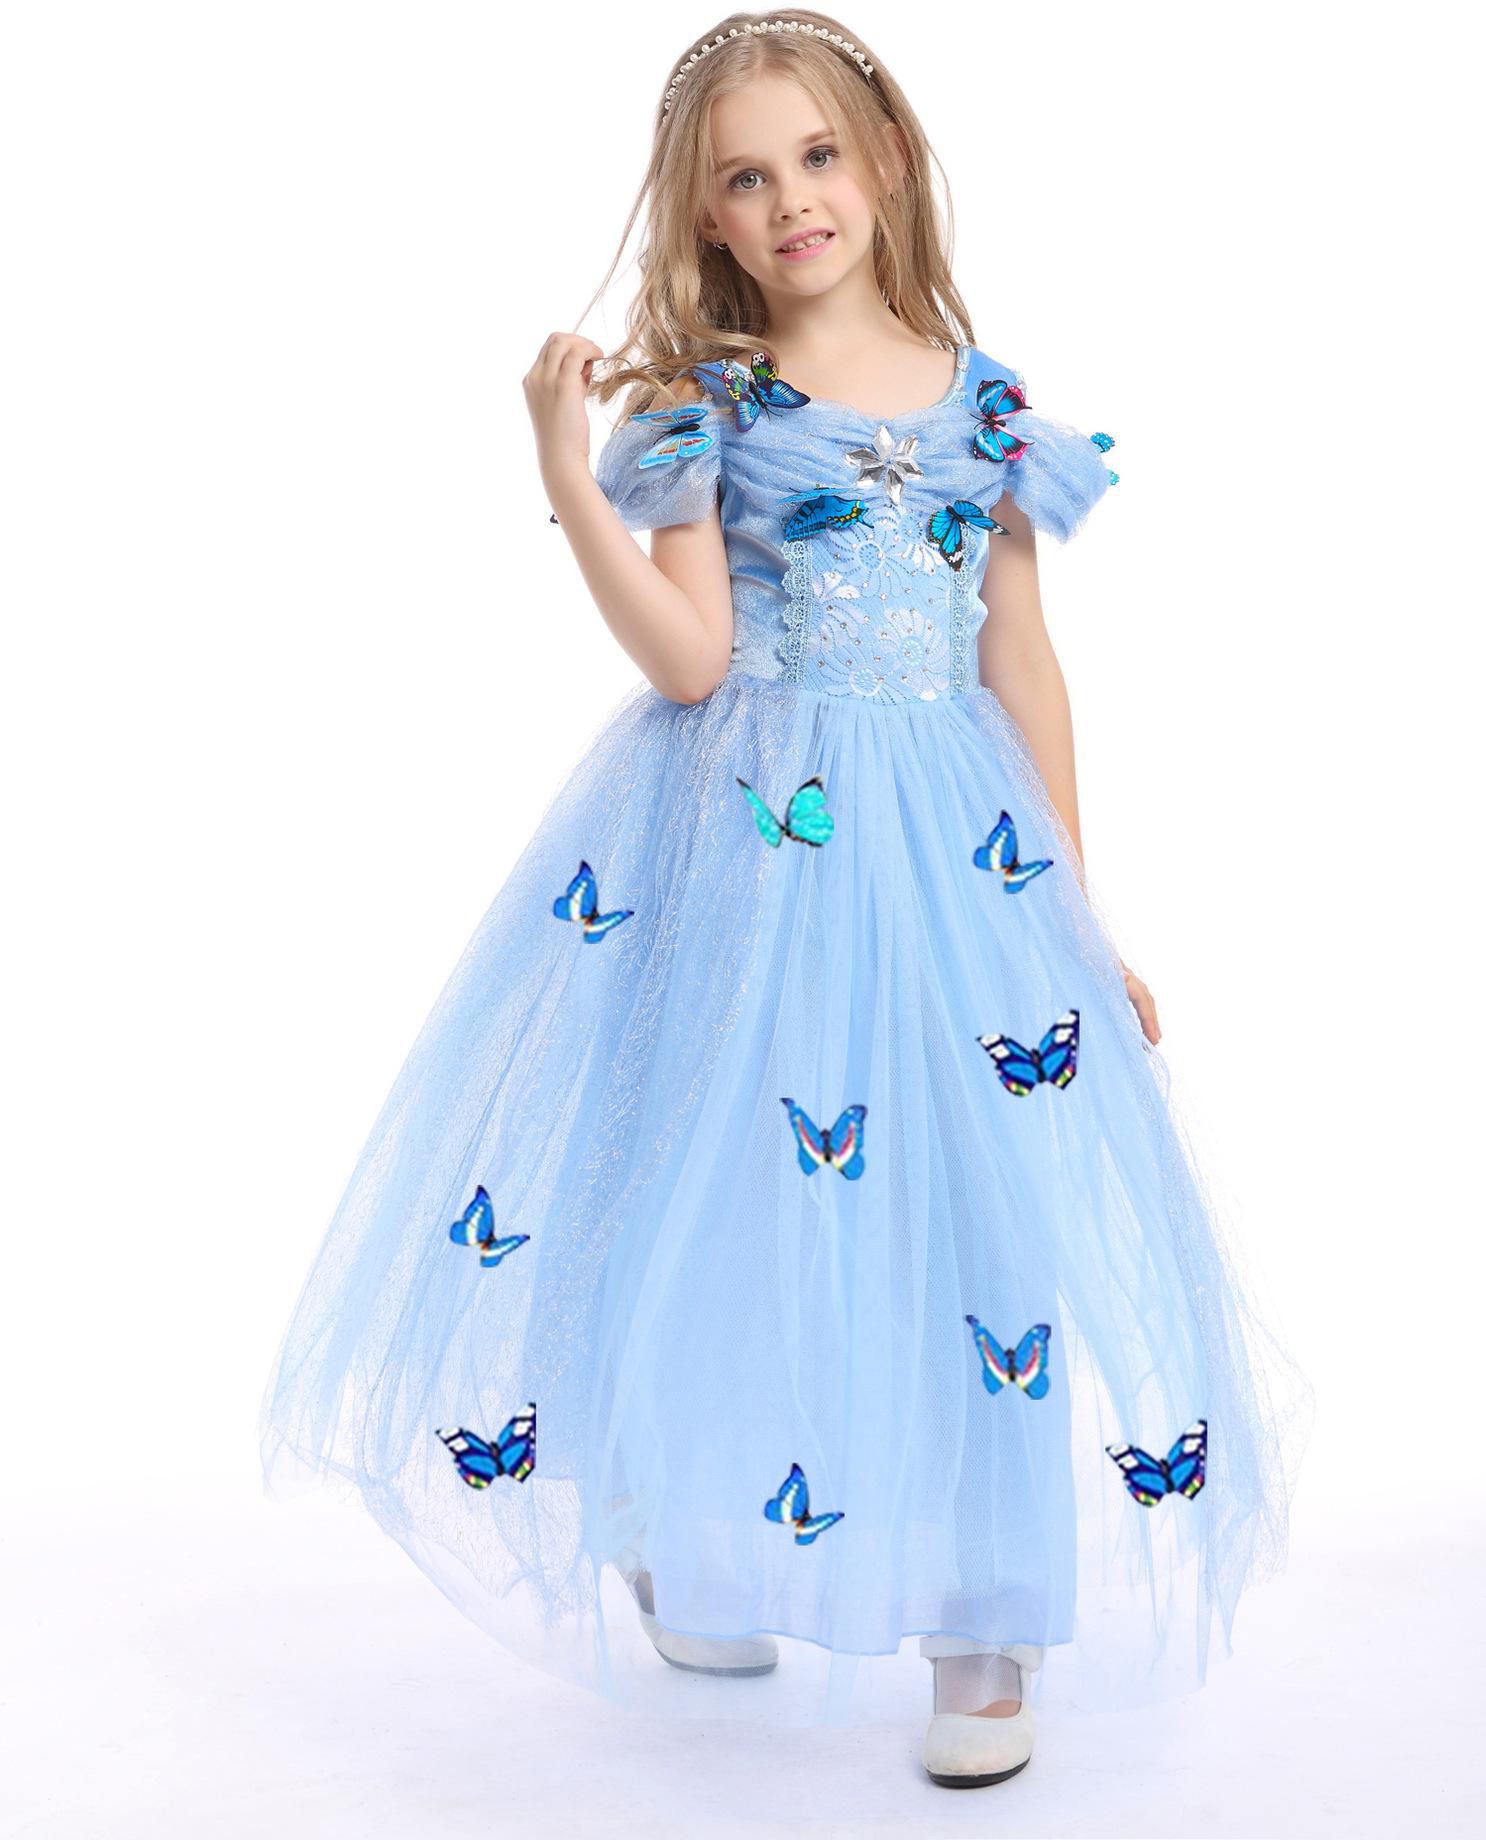 Koolkidzstore Girls Party Cosplay Princess Dress (Blue)